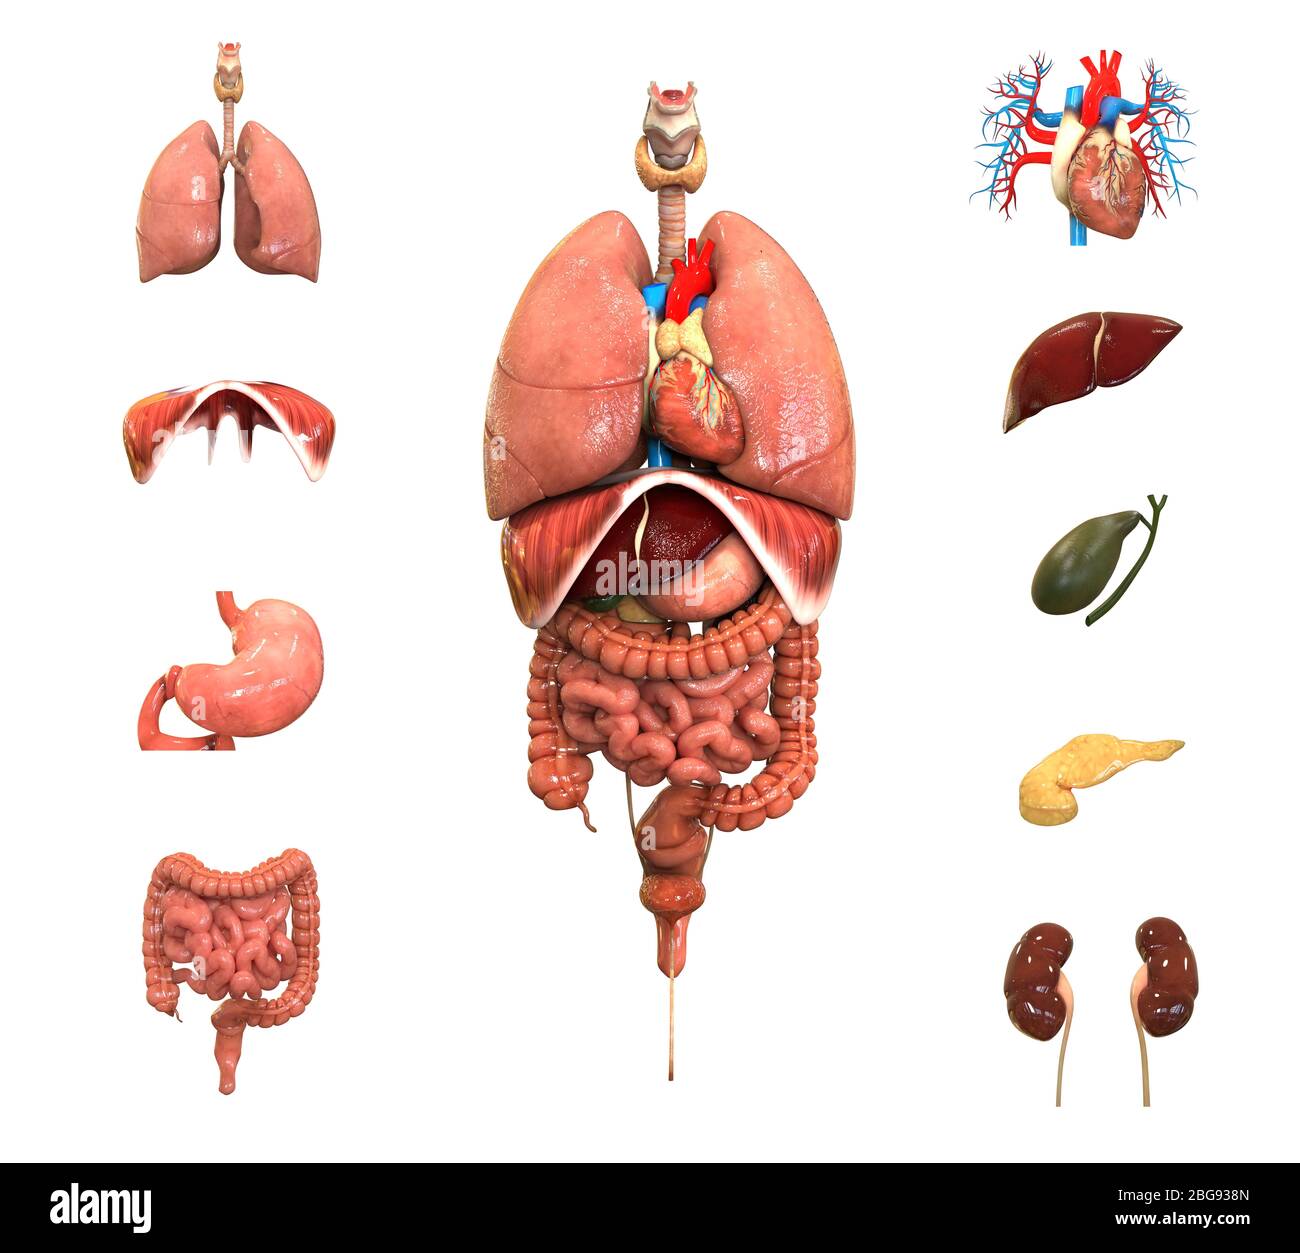 Human Body Complete Internal Organs Anatomy Stock Photo Alamy